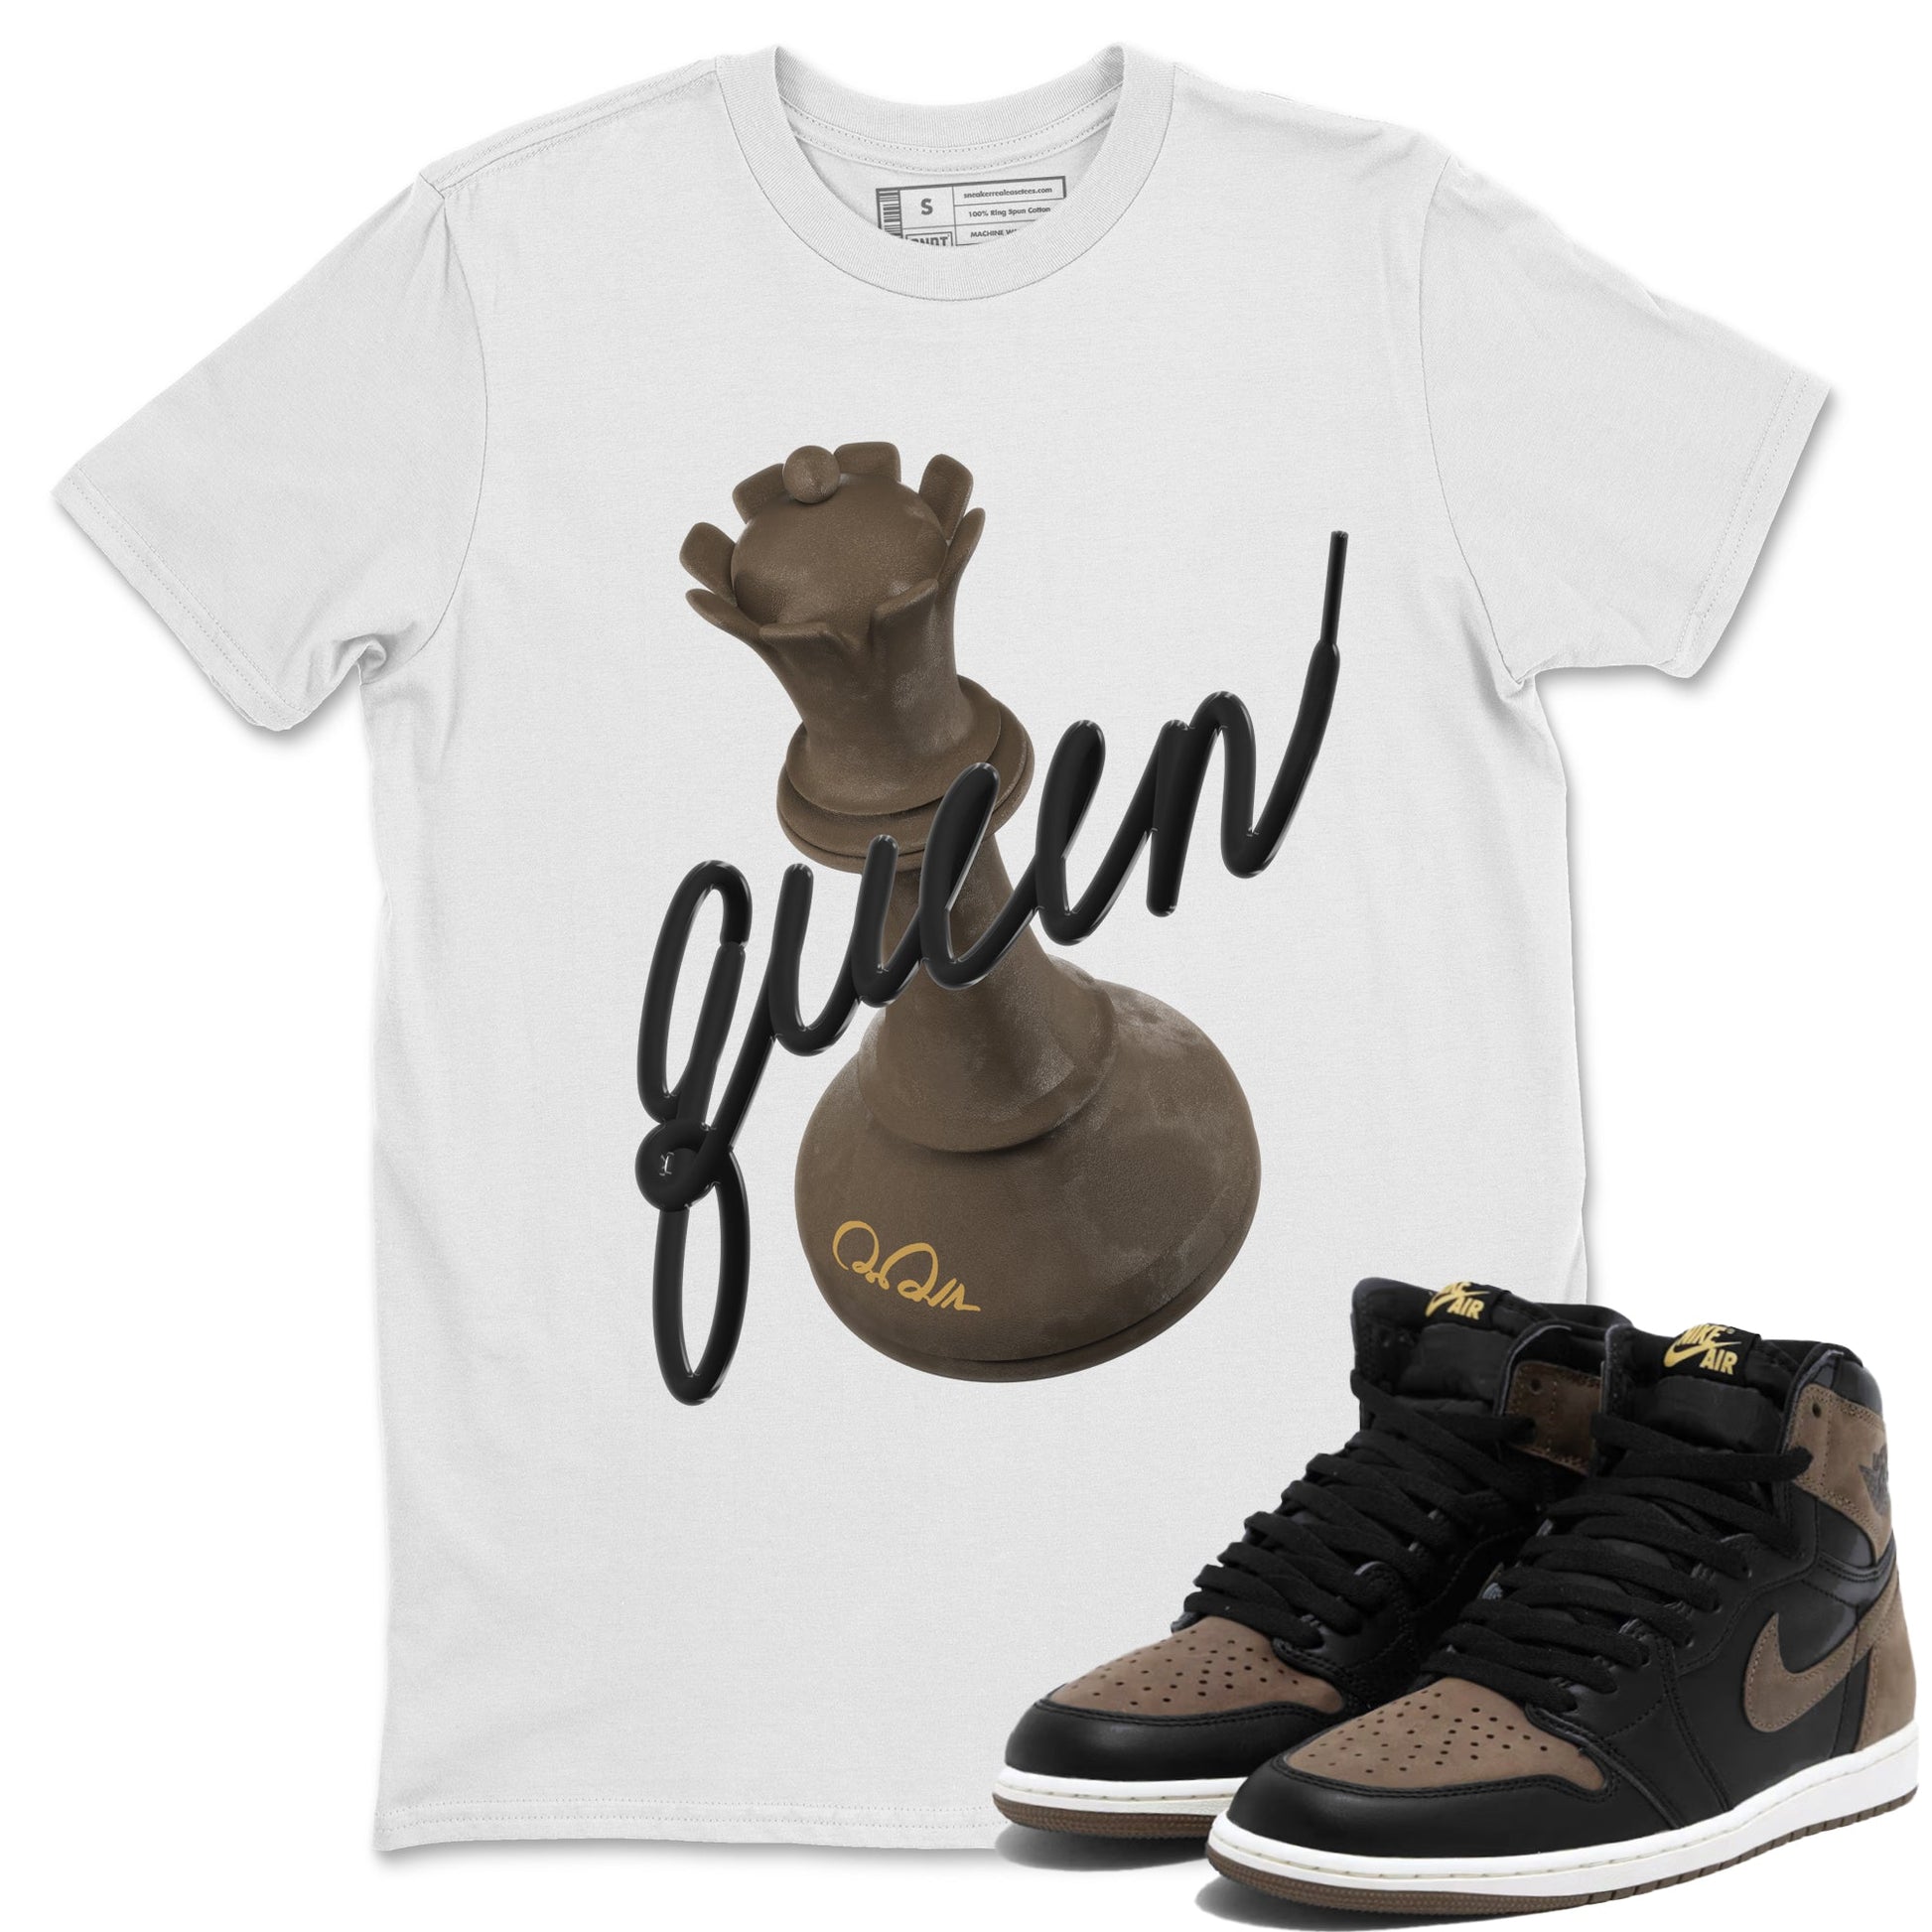 Air Jordan 1 Palomino shirt to match jordans 3D Queen Streetwear Sneaker Shirt AJ1 High Palomino Drip Gear Zone Sneaker Matching Clothing Unisex White 1 T-Shirt